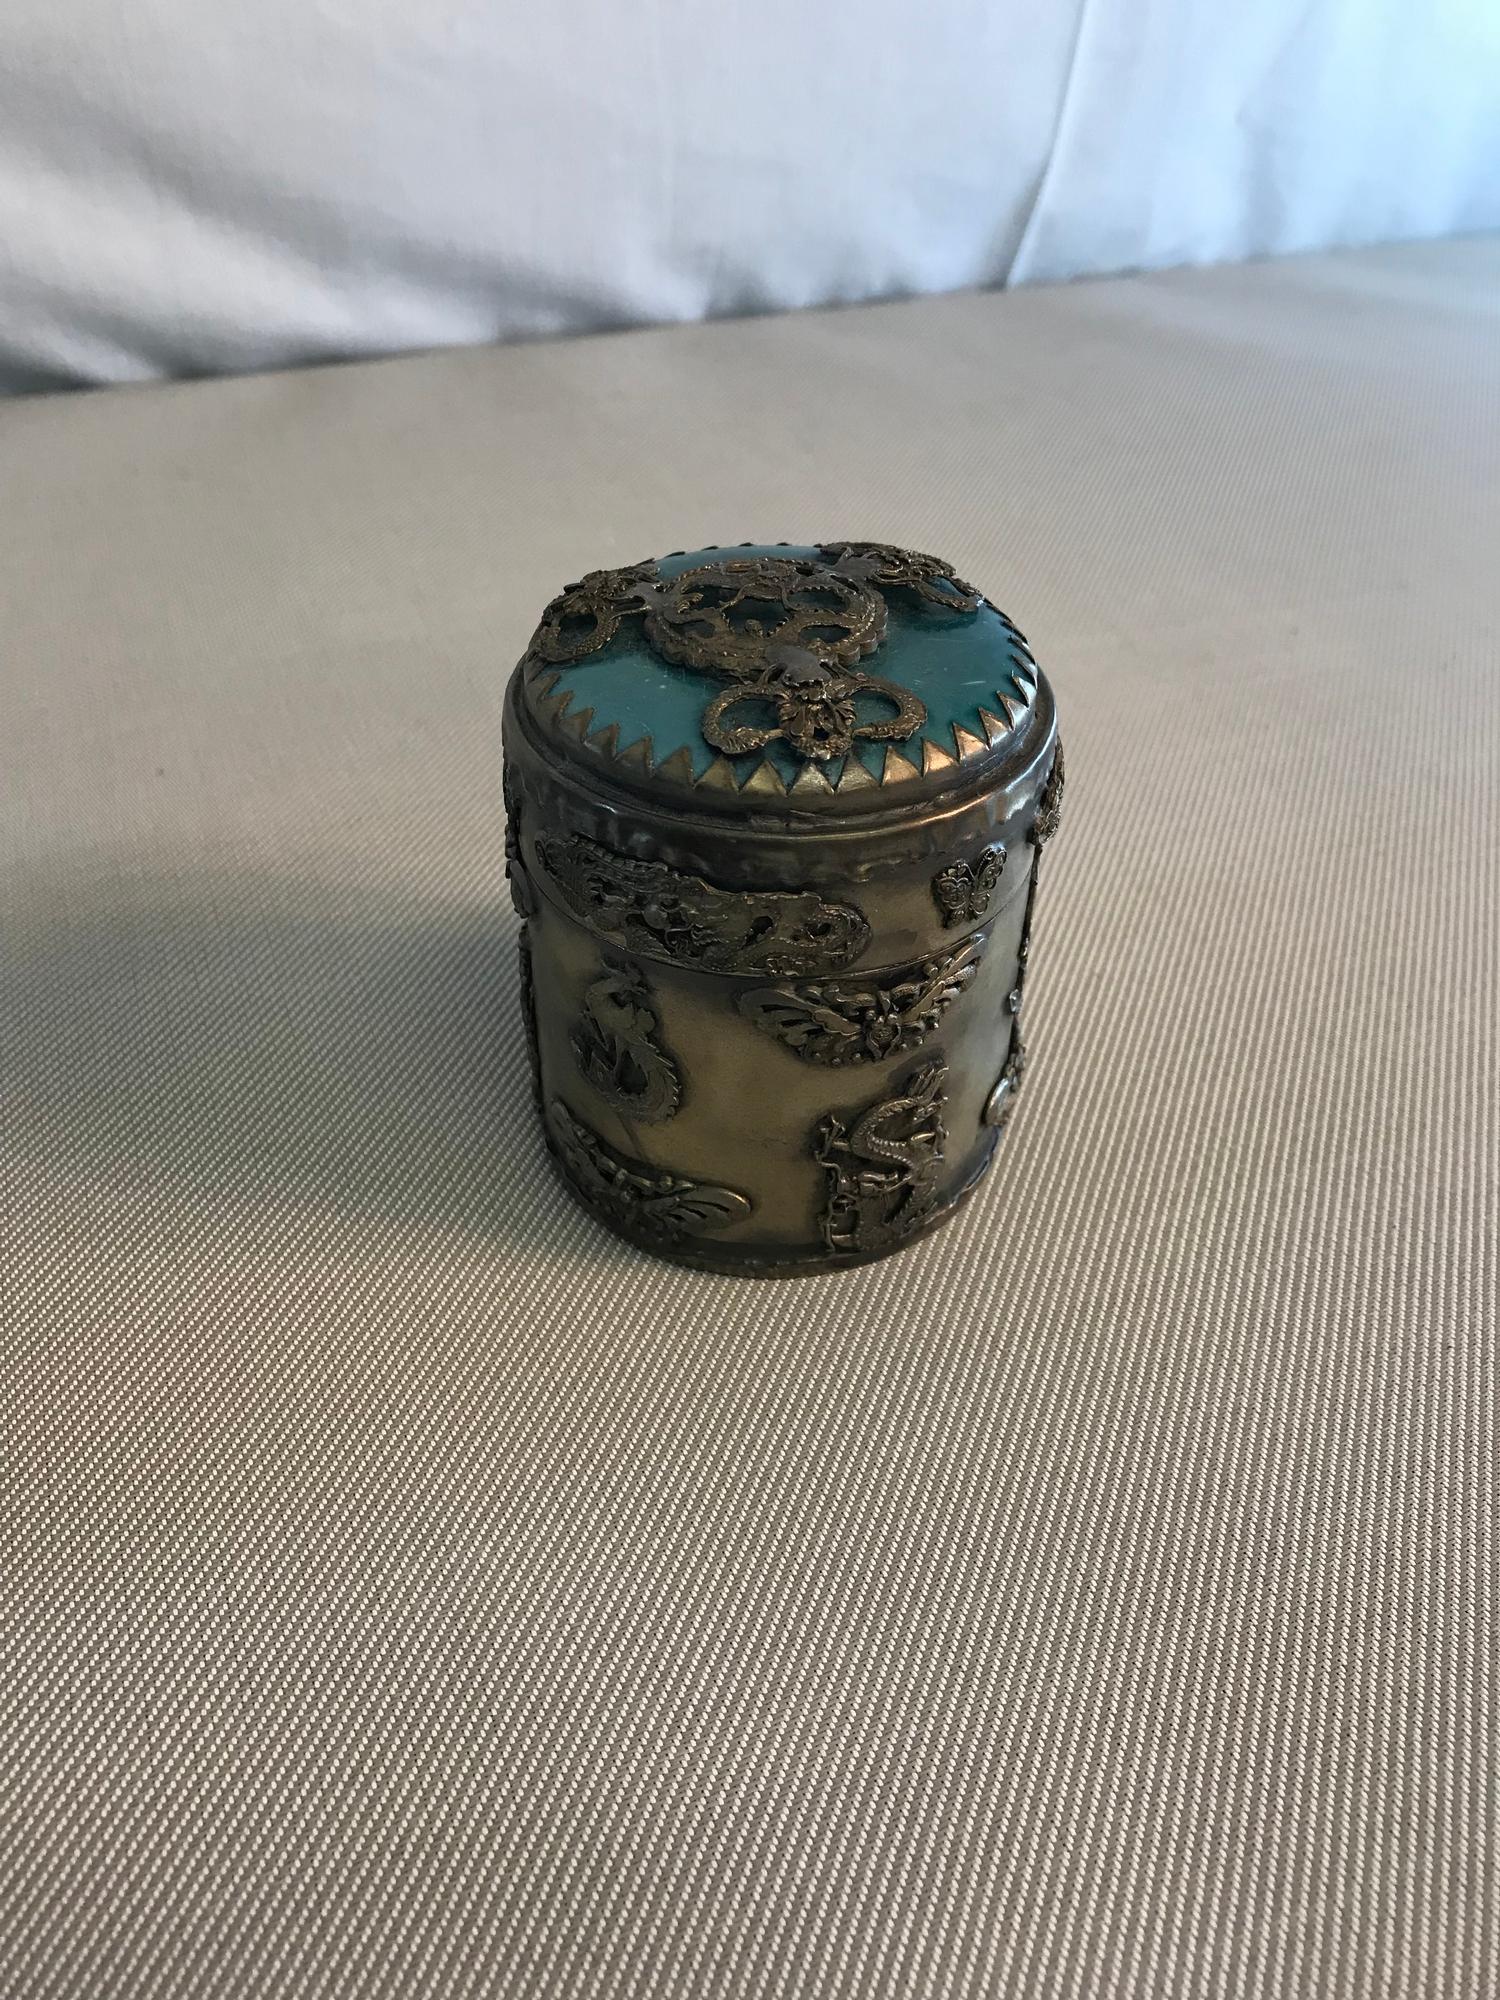 Tibetan White metal storage pot with turquoise stone top. Depicting dragons, phoenix &